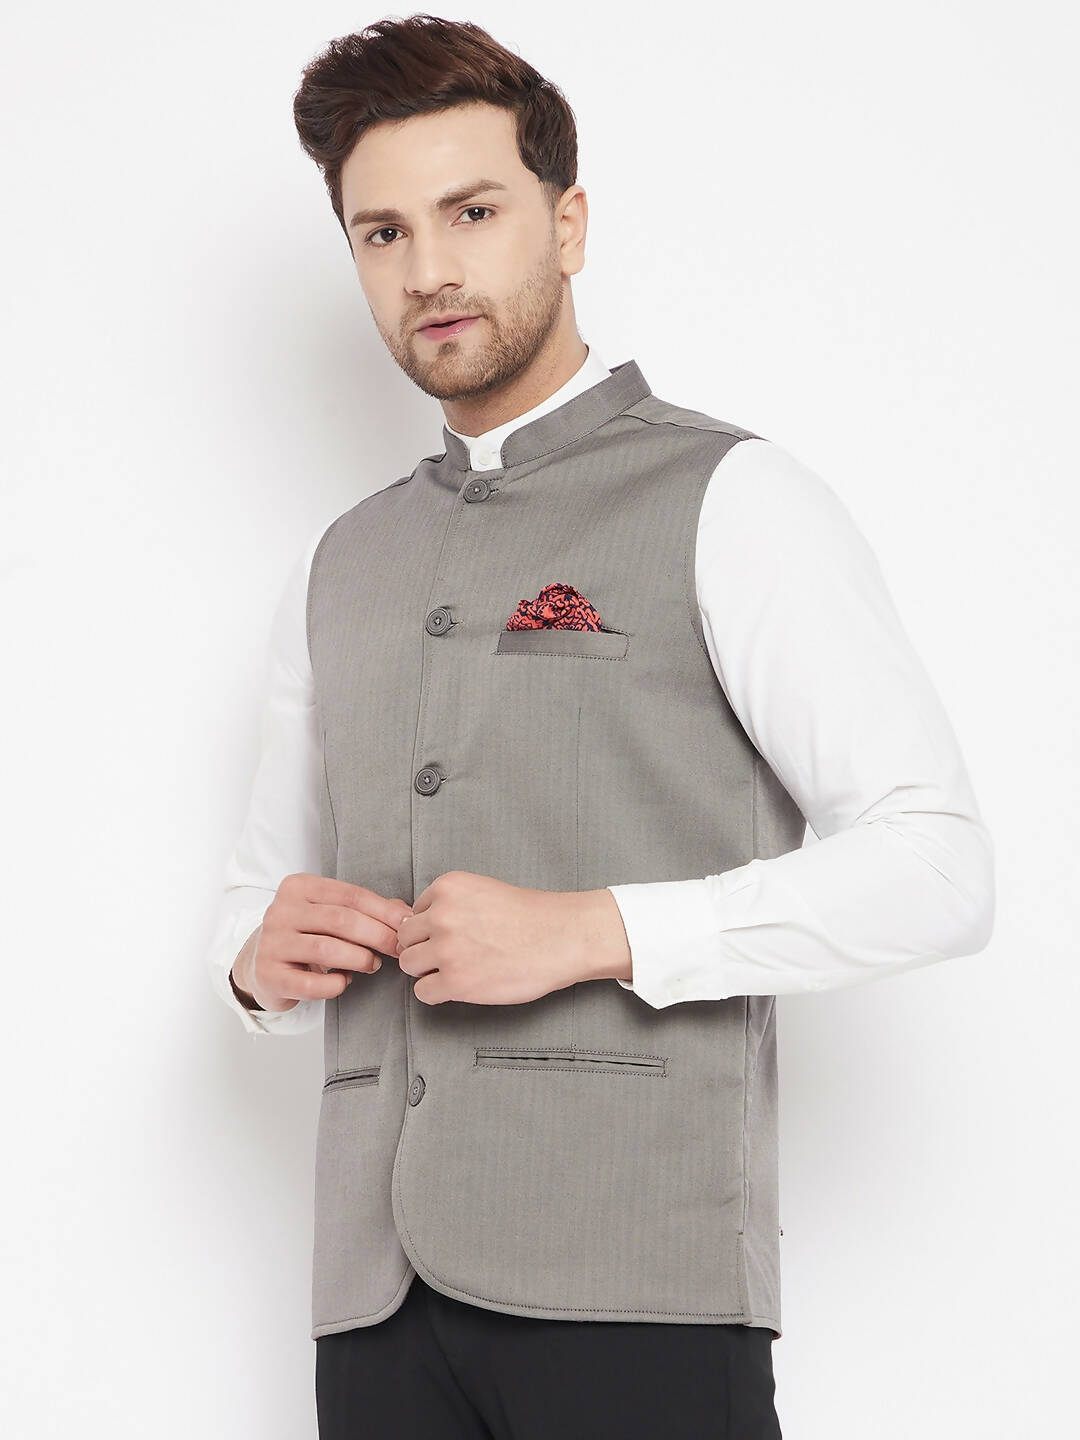 Beige linen nehru Suit Jacket with pocket square